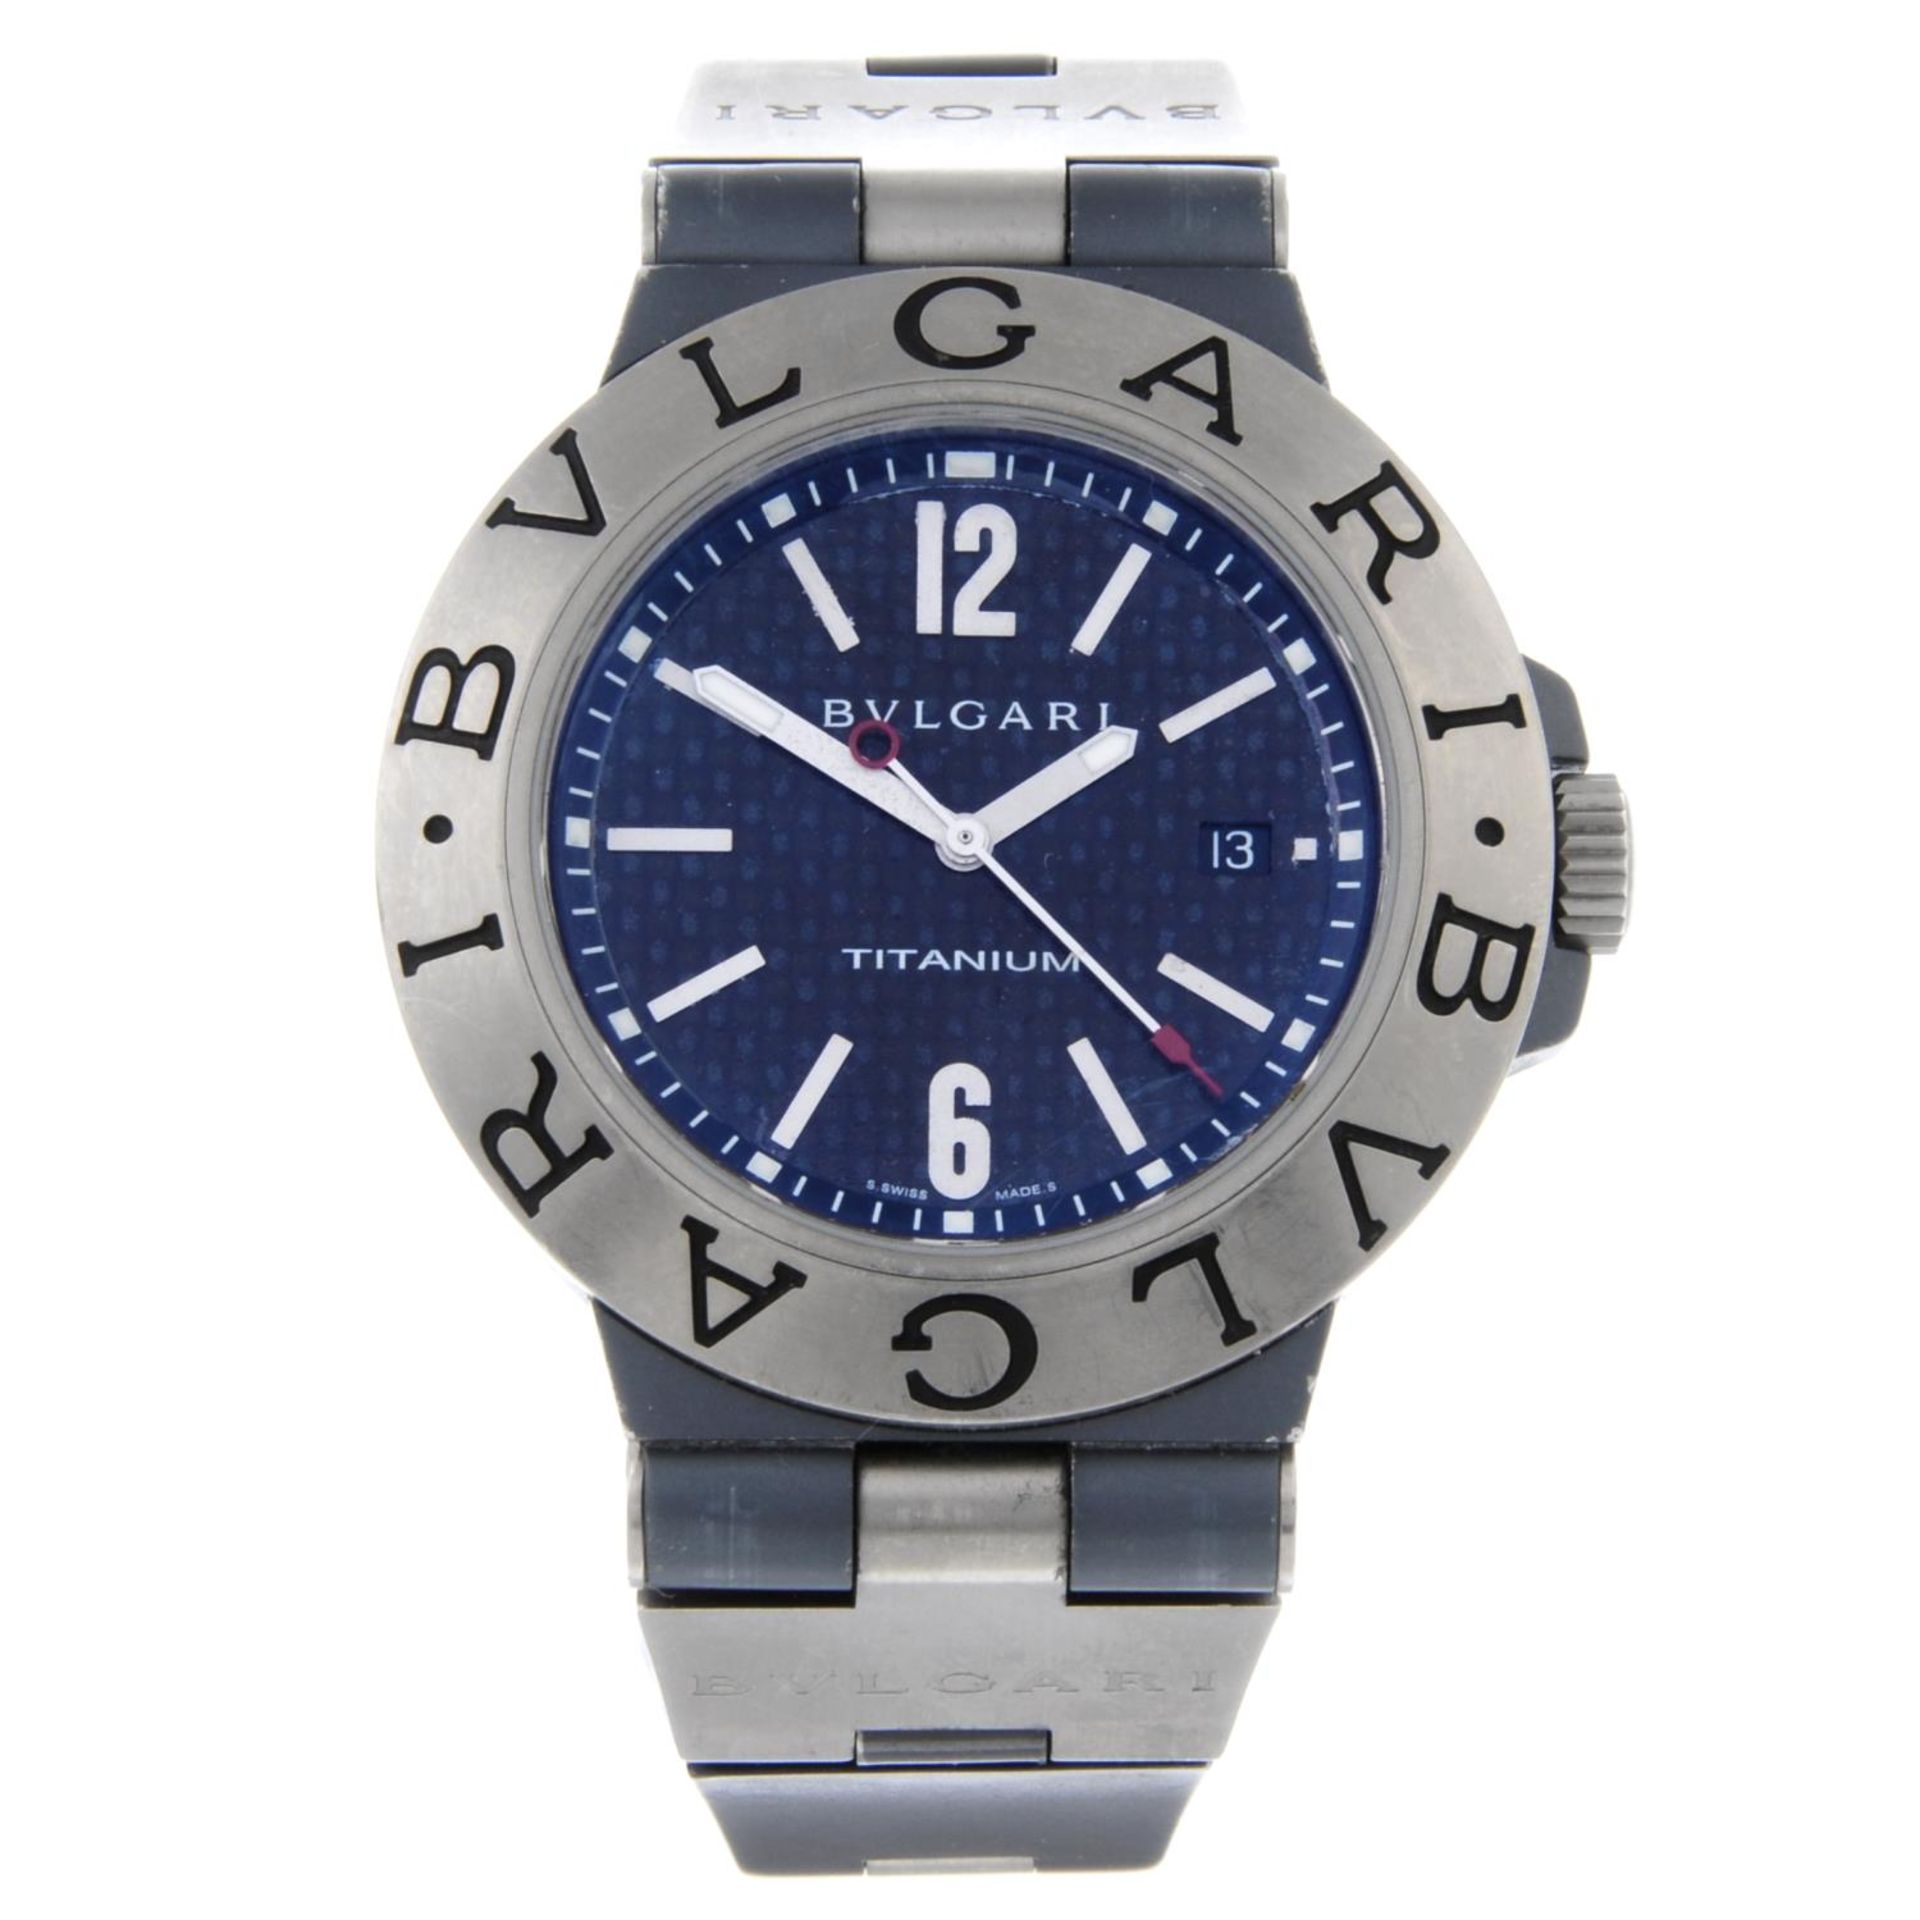 BULGARI - a gentleman's Diagono wrist watch.